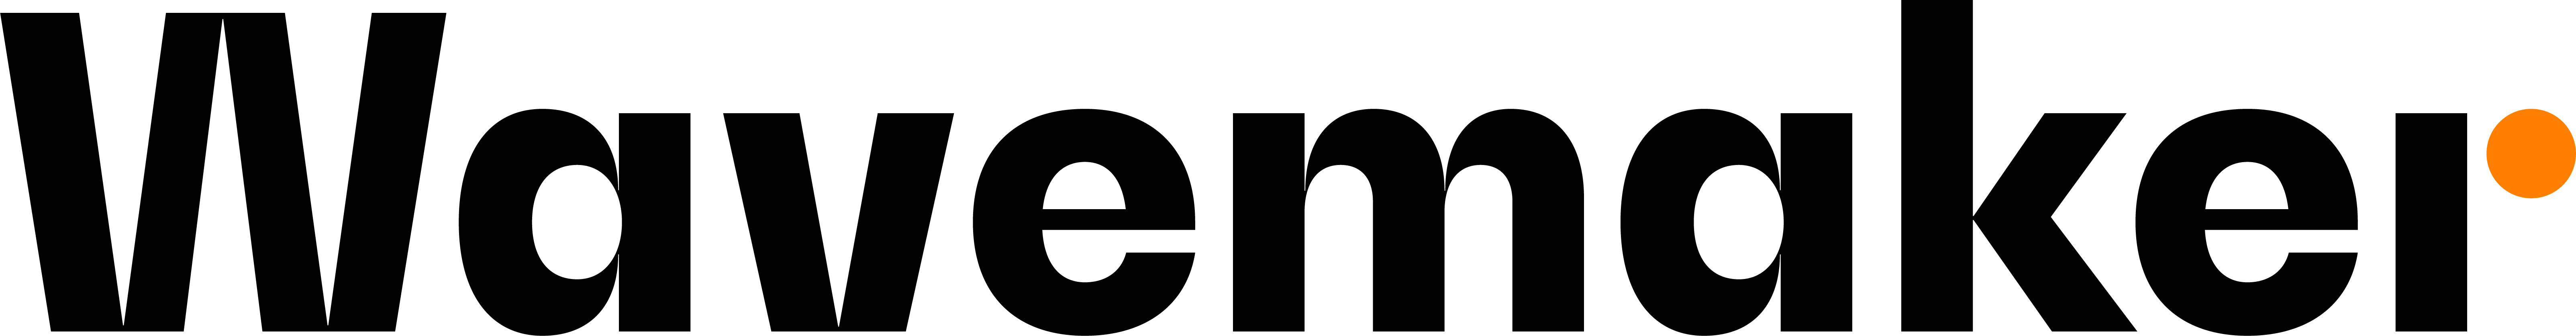 Wavemaker-logo_March-2020-2